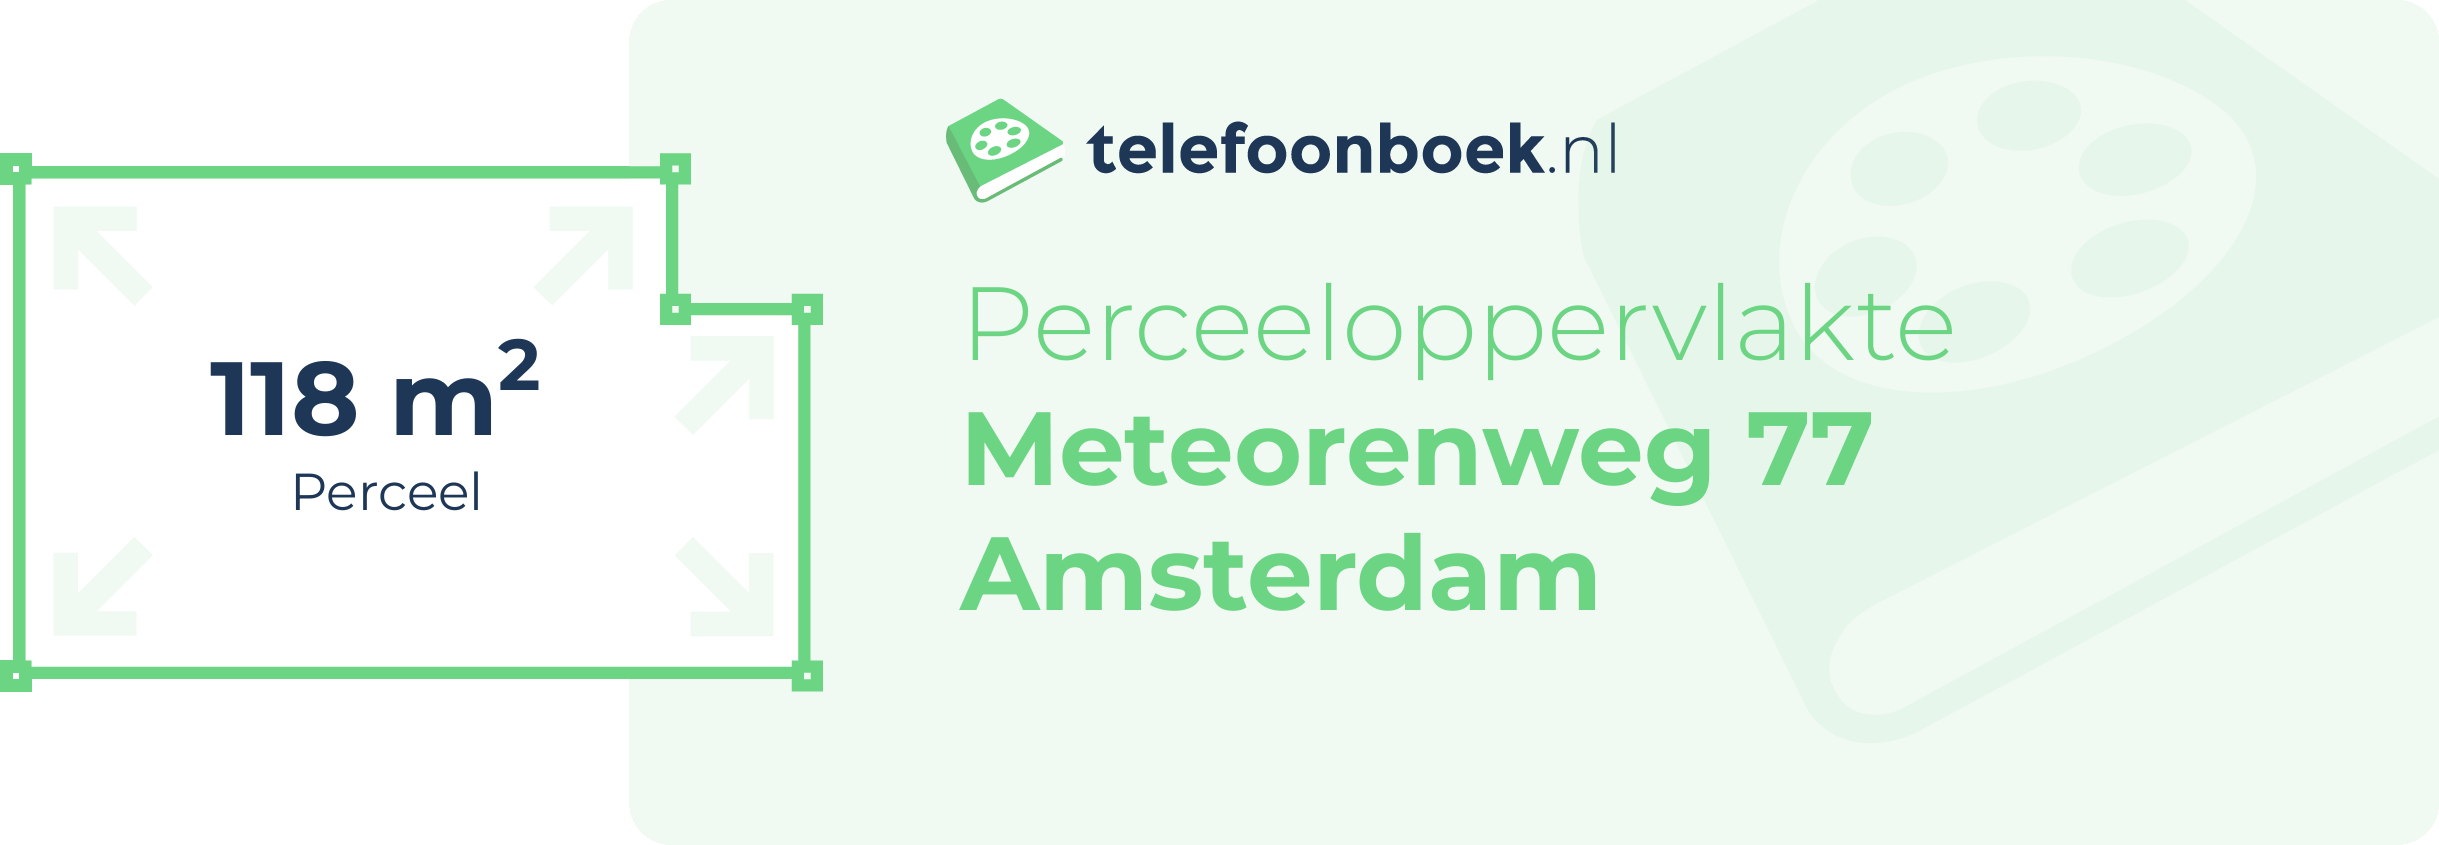 Perceeloppervlakte Meteorenweg 77 Amsterdam